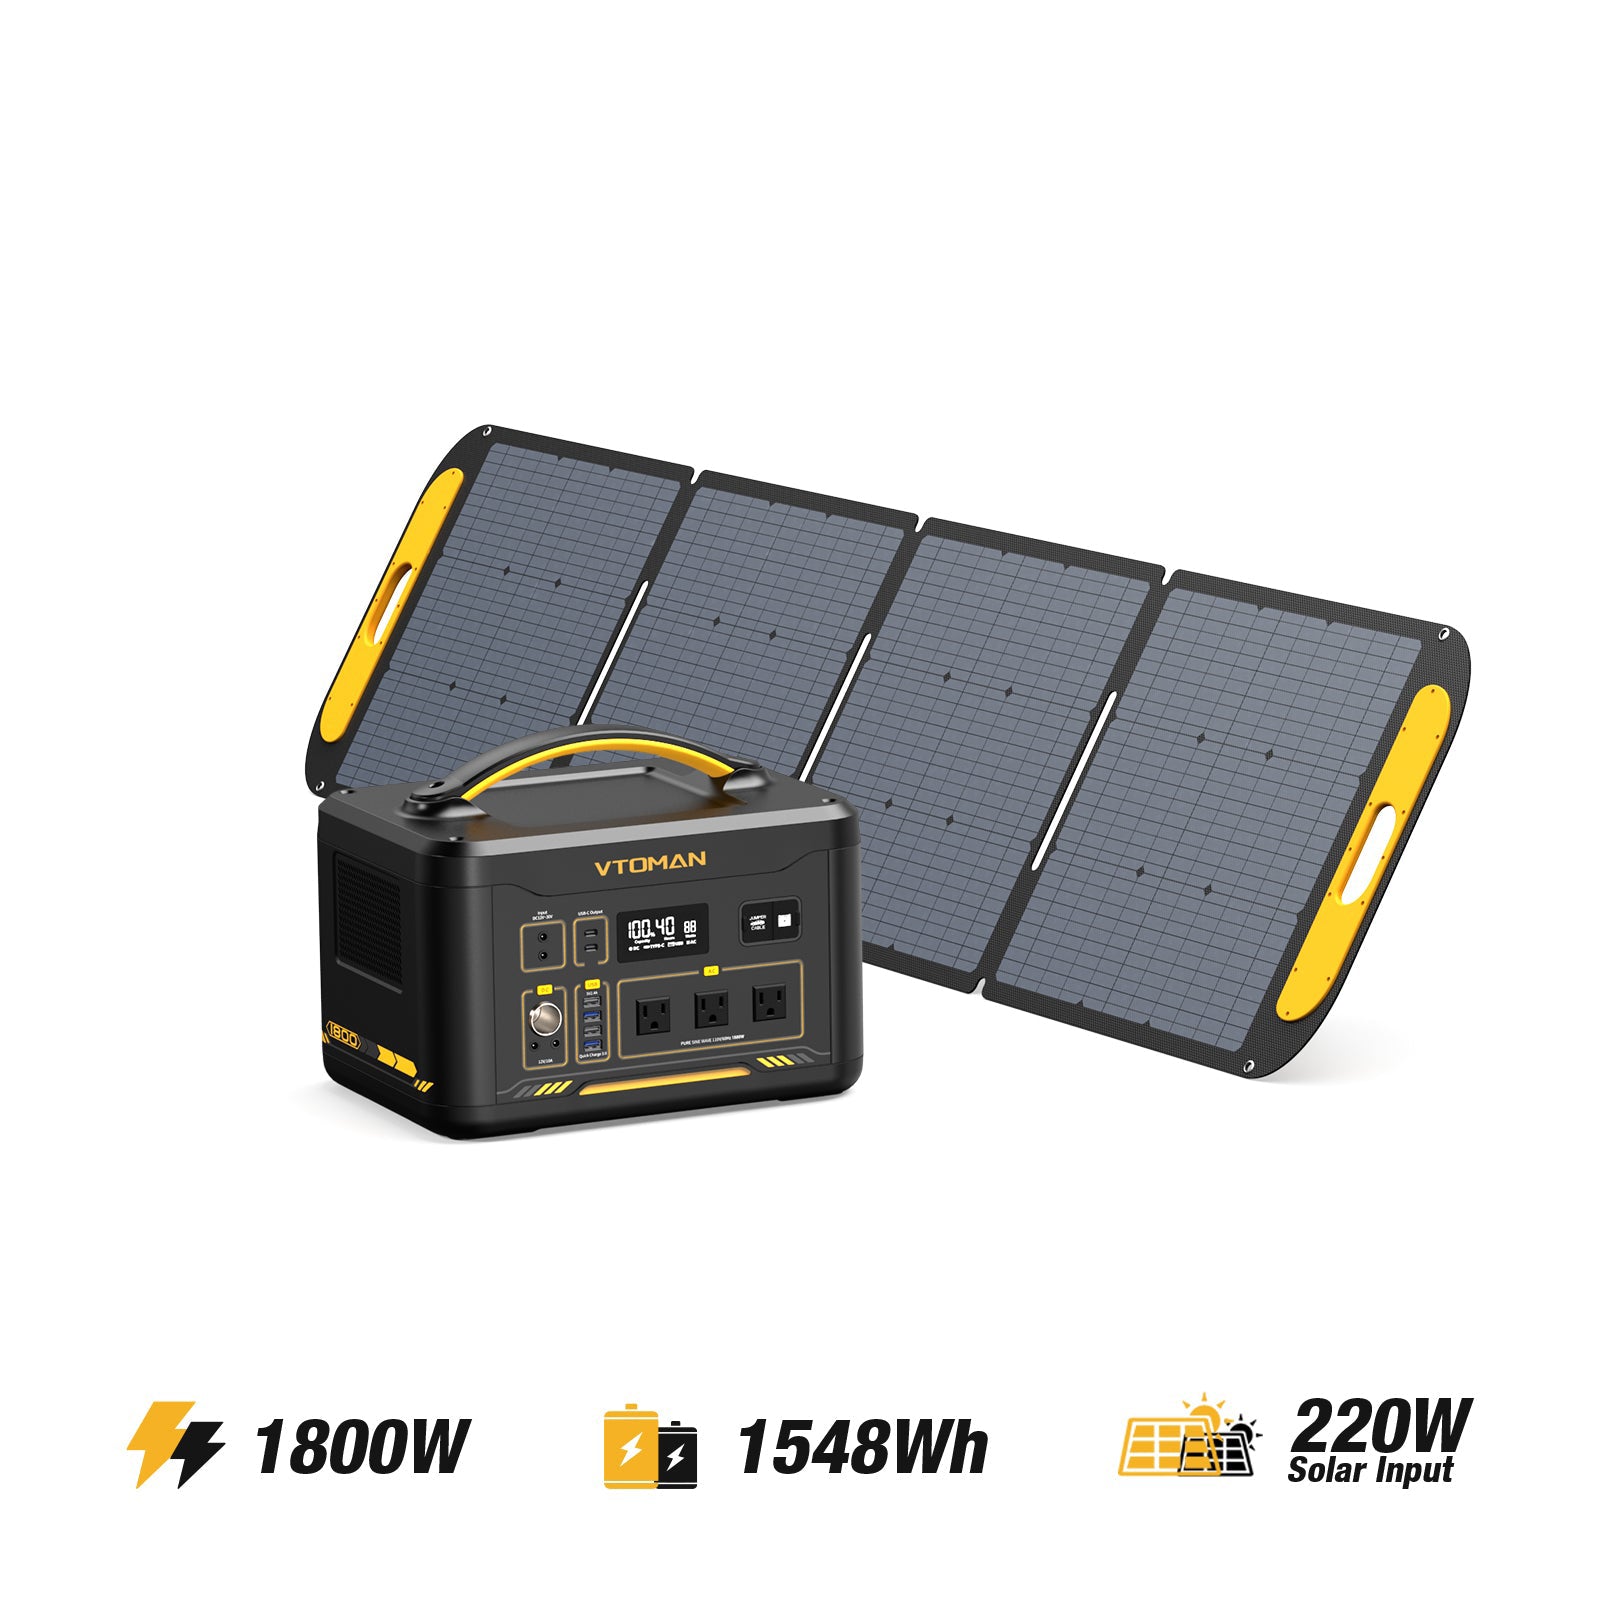 jump 1800W/1548Wh 220w solar generator